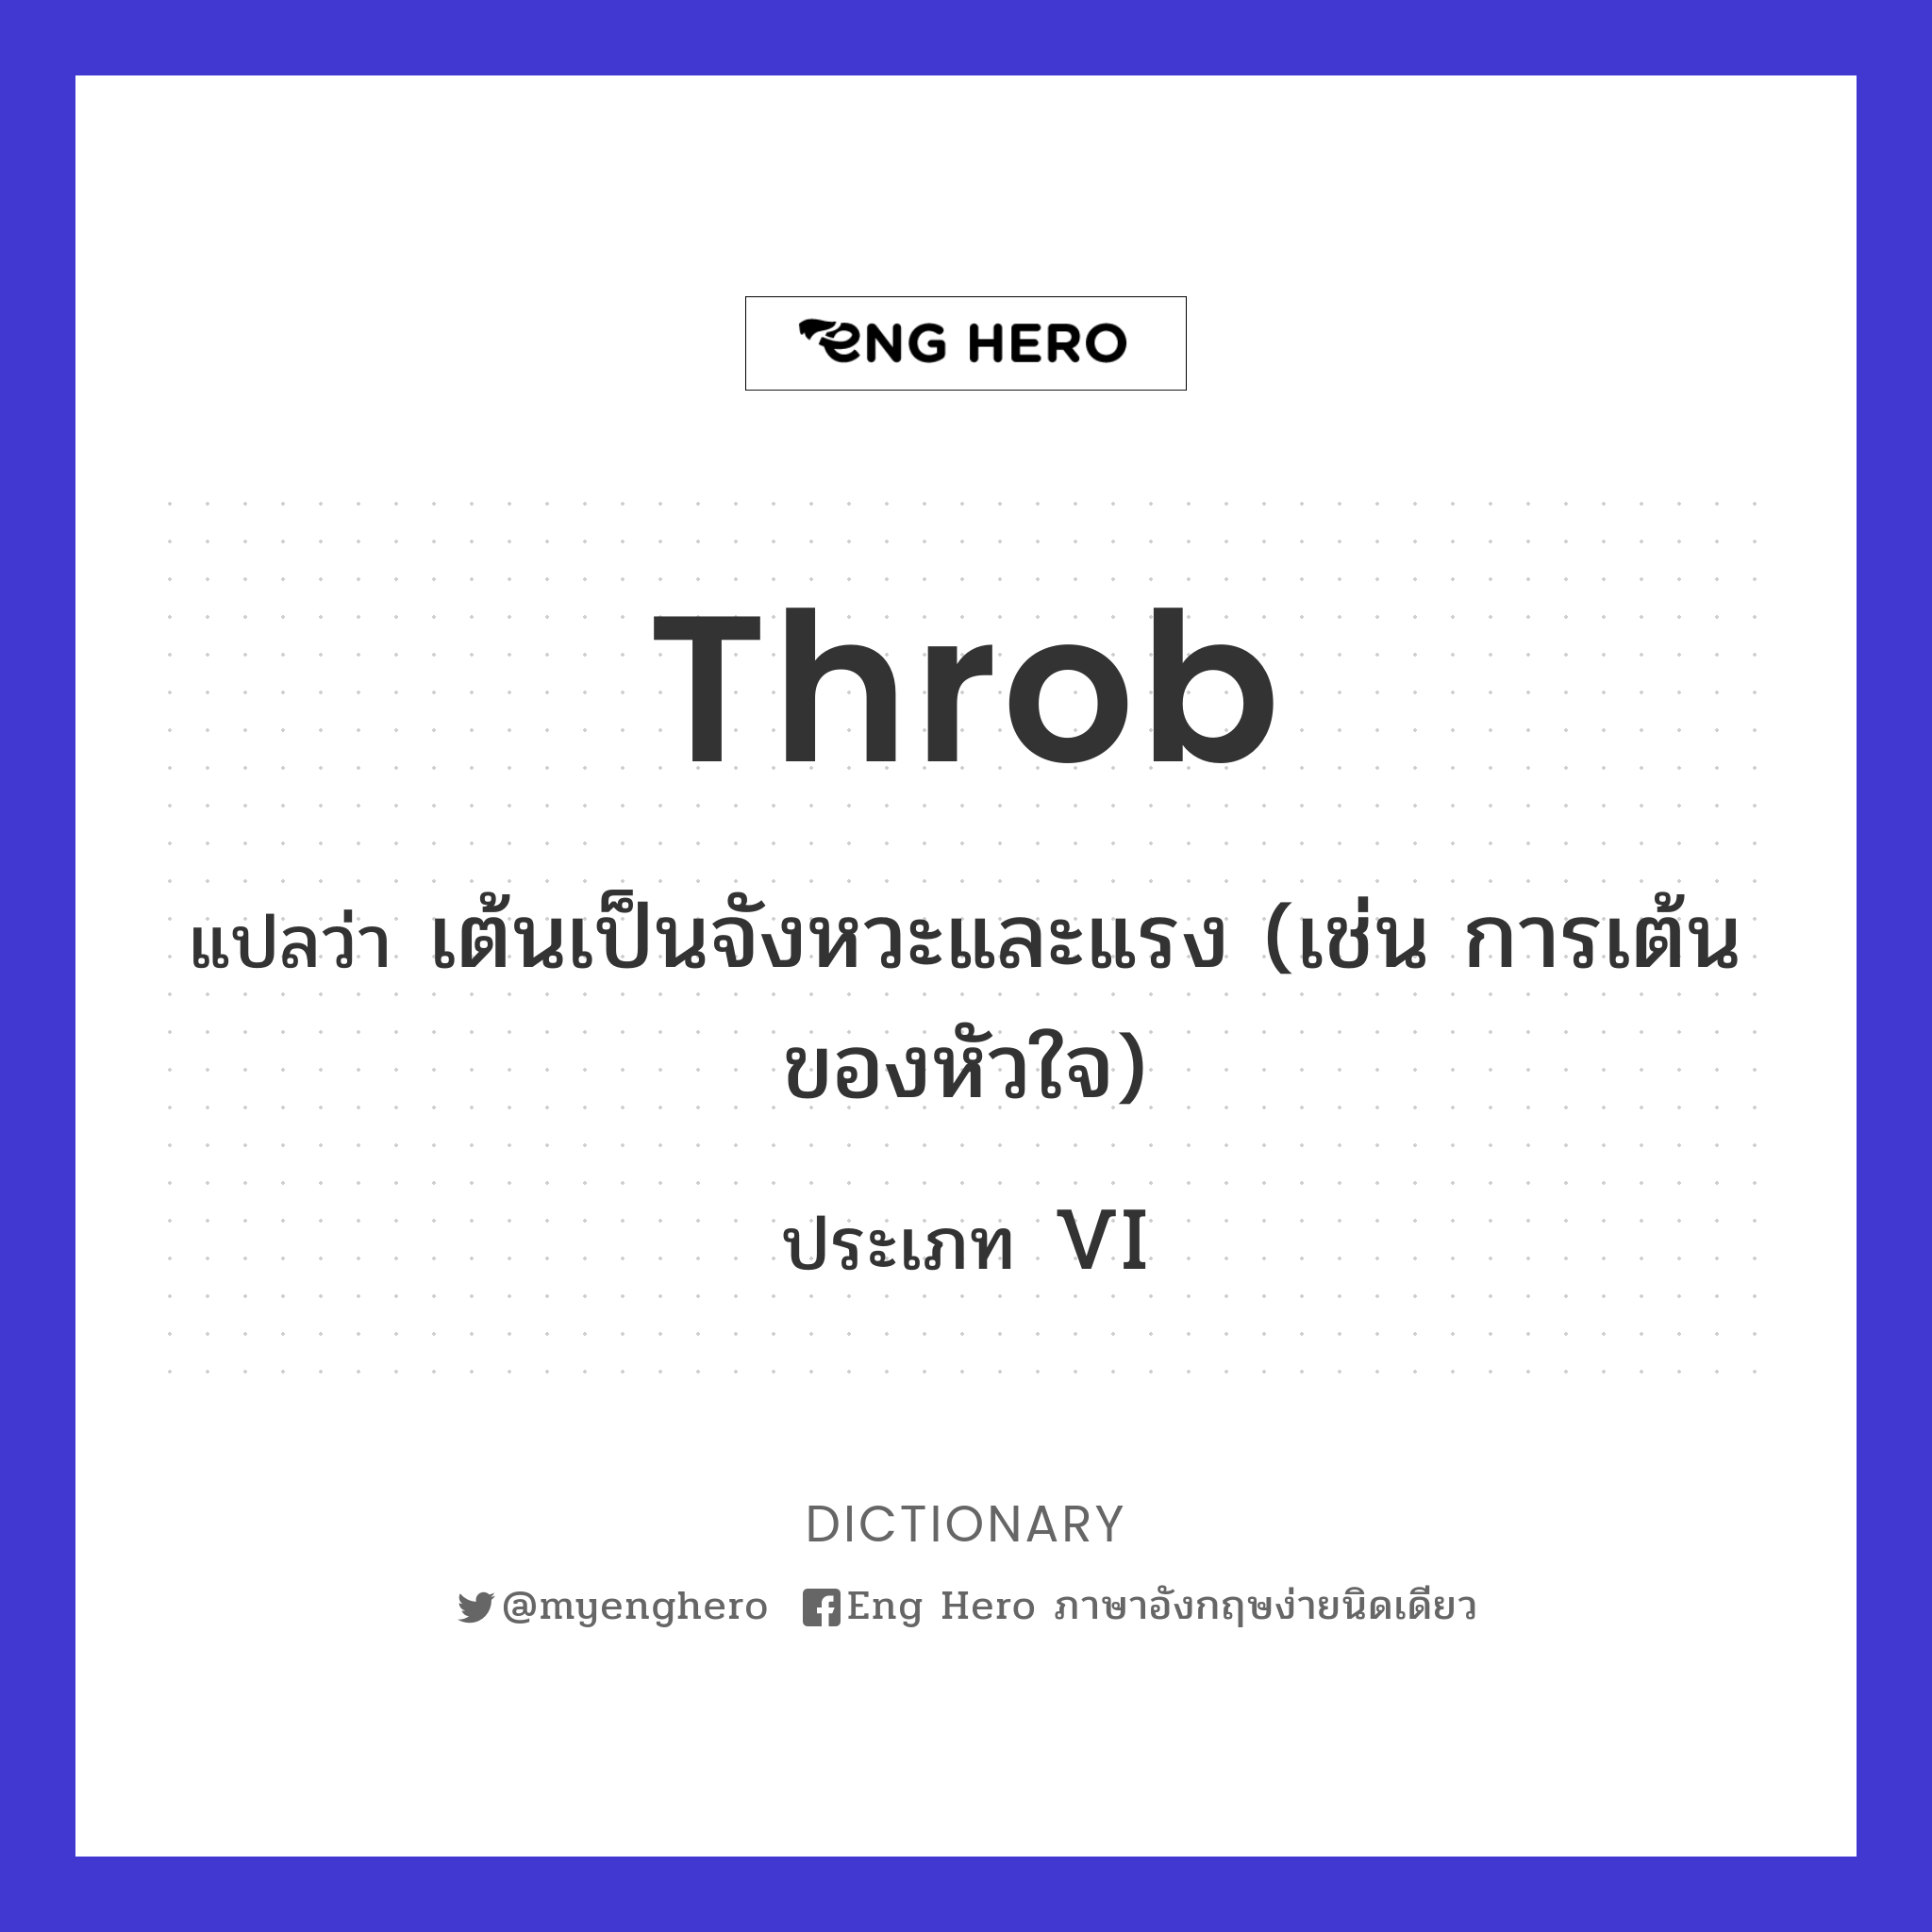 throb